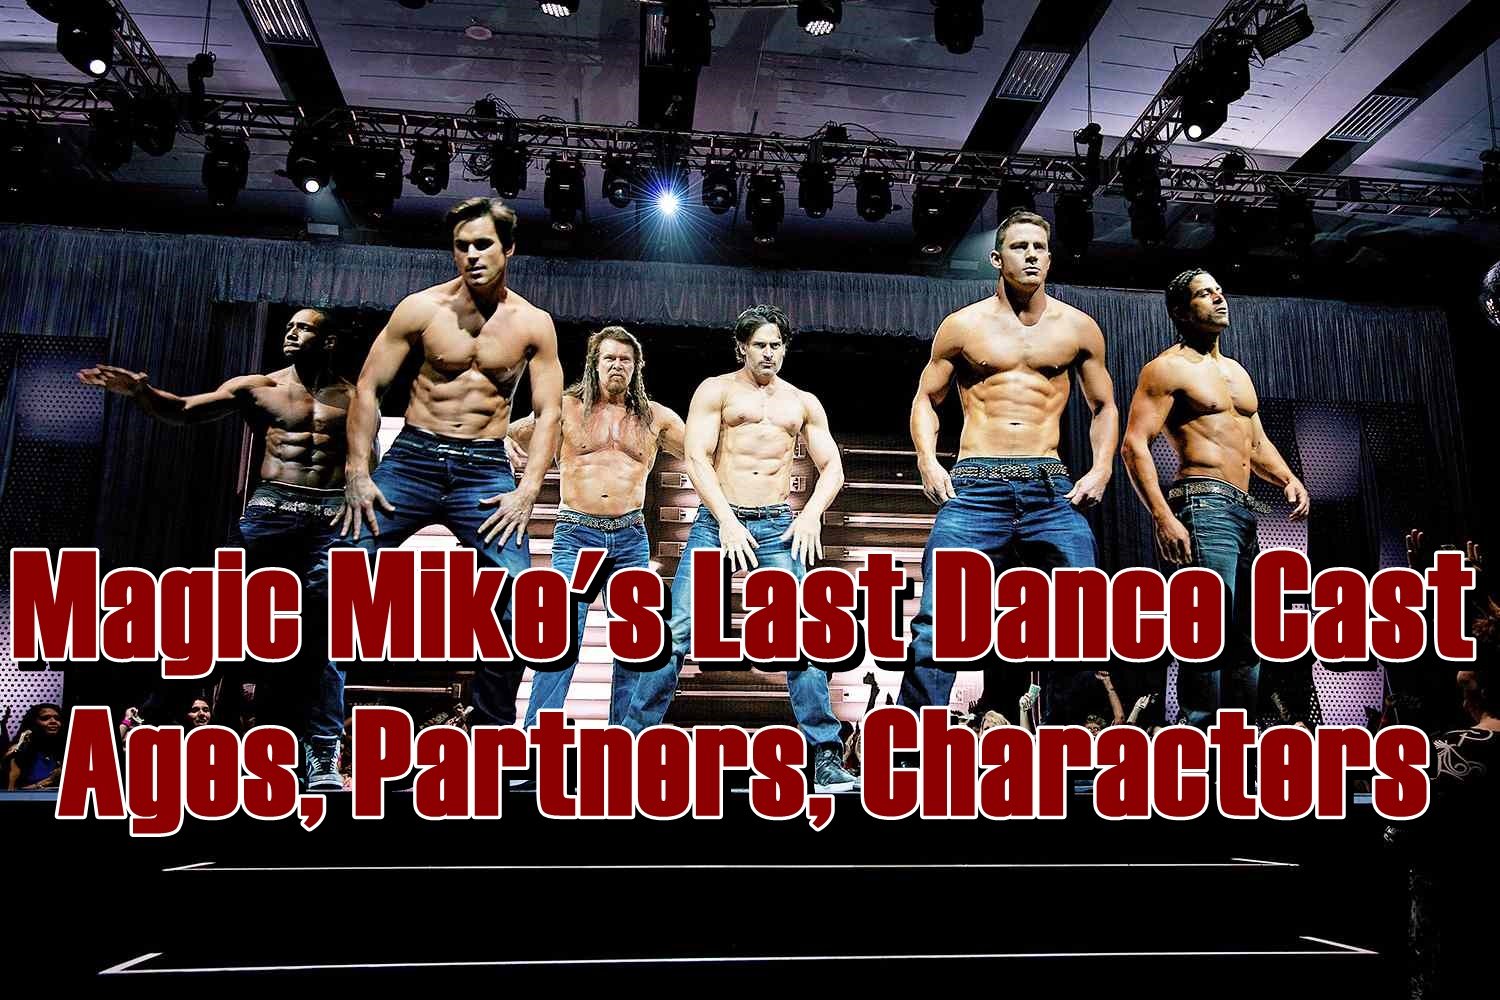 Magic Mike's Last Dance Cast - Ages, Partners, Characters